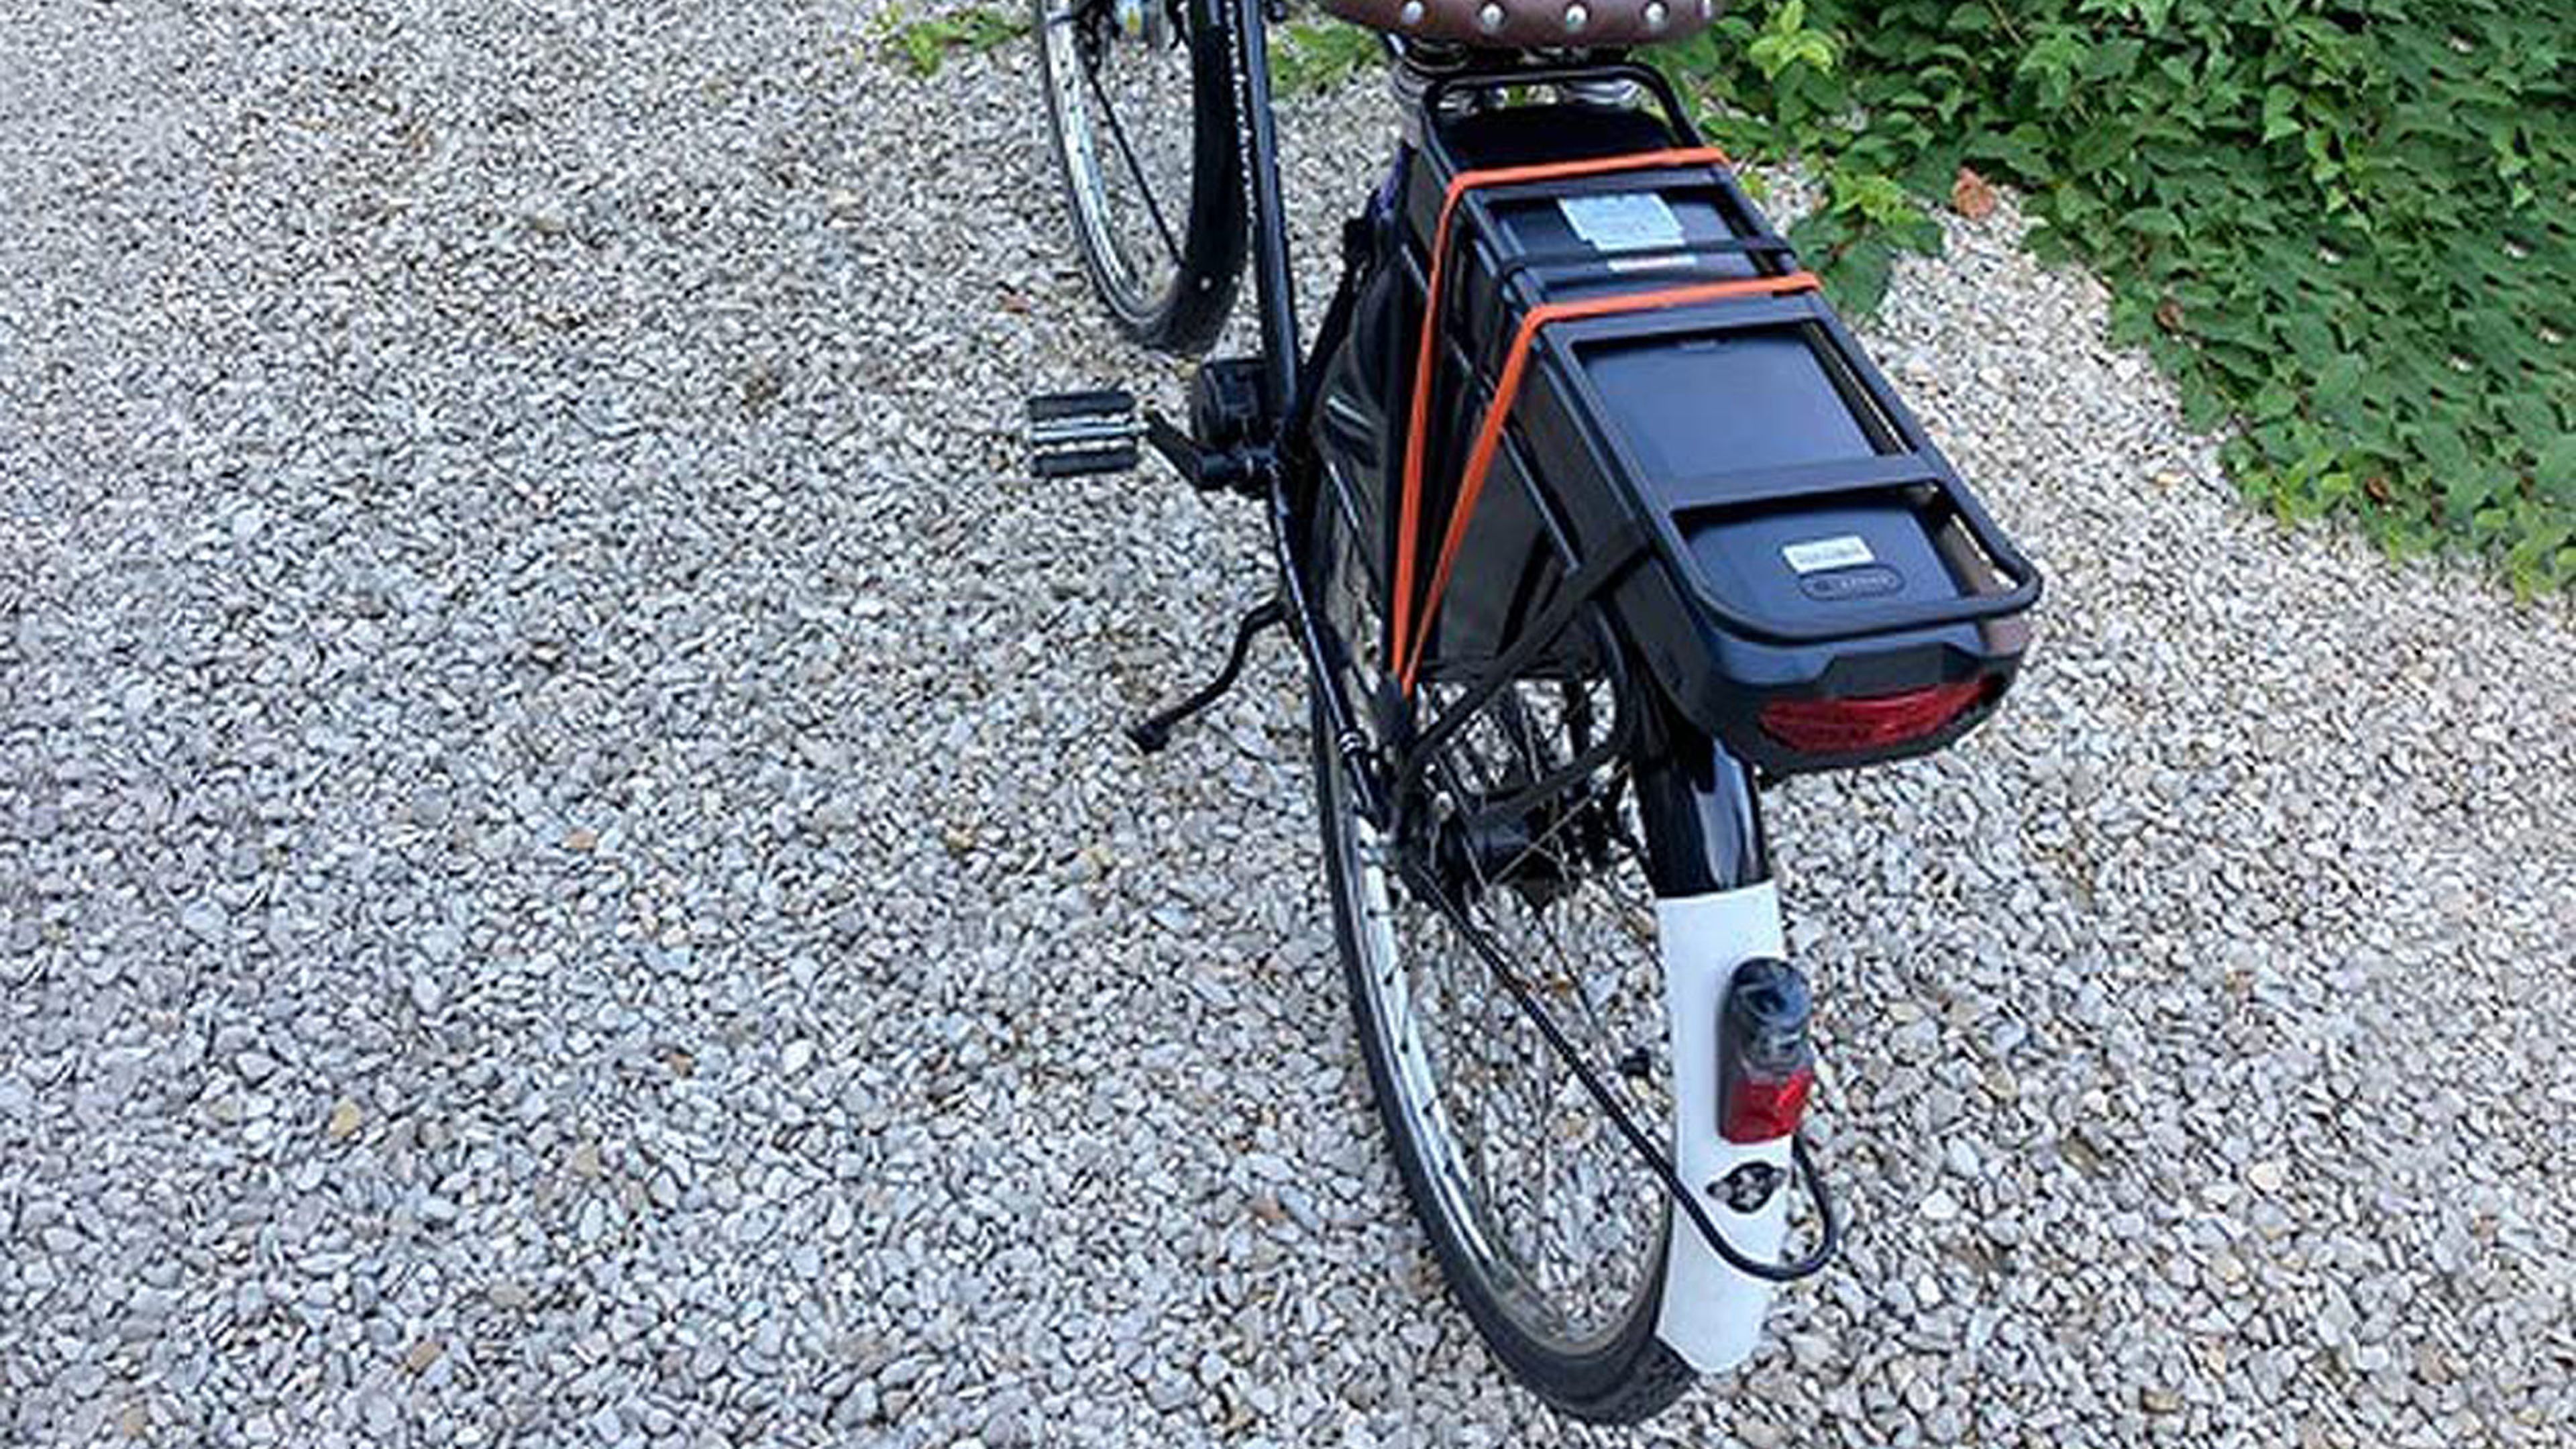 Kit Bicicleta Eléctrica Plegable - Avanzado